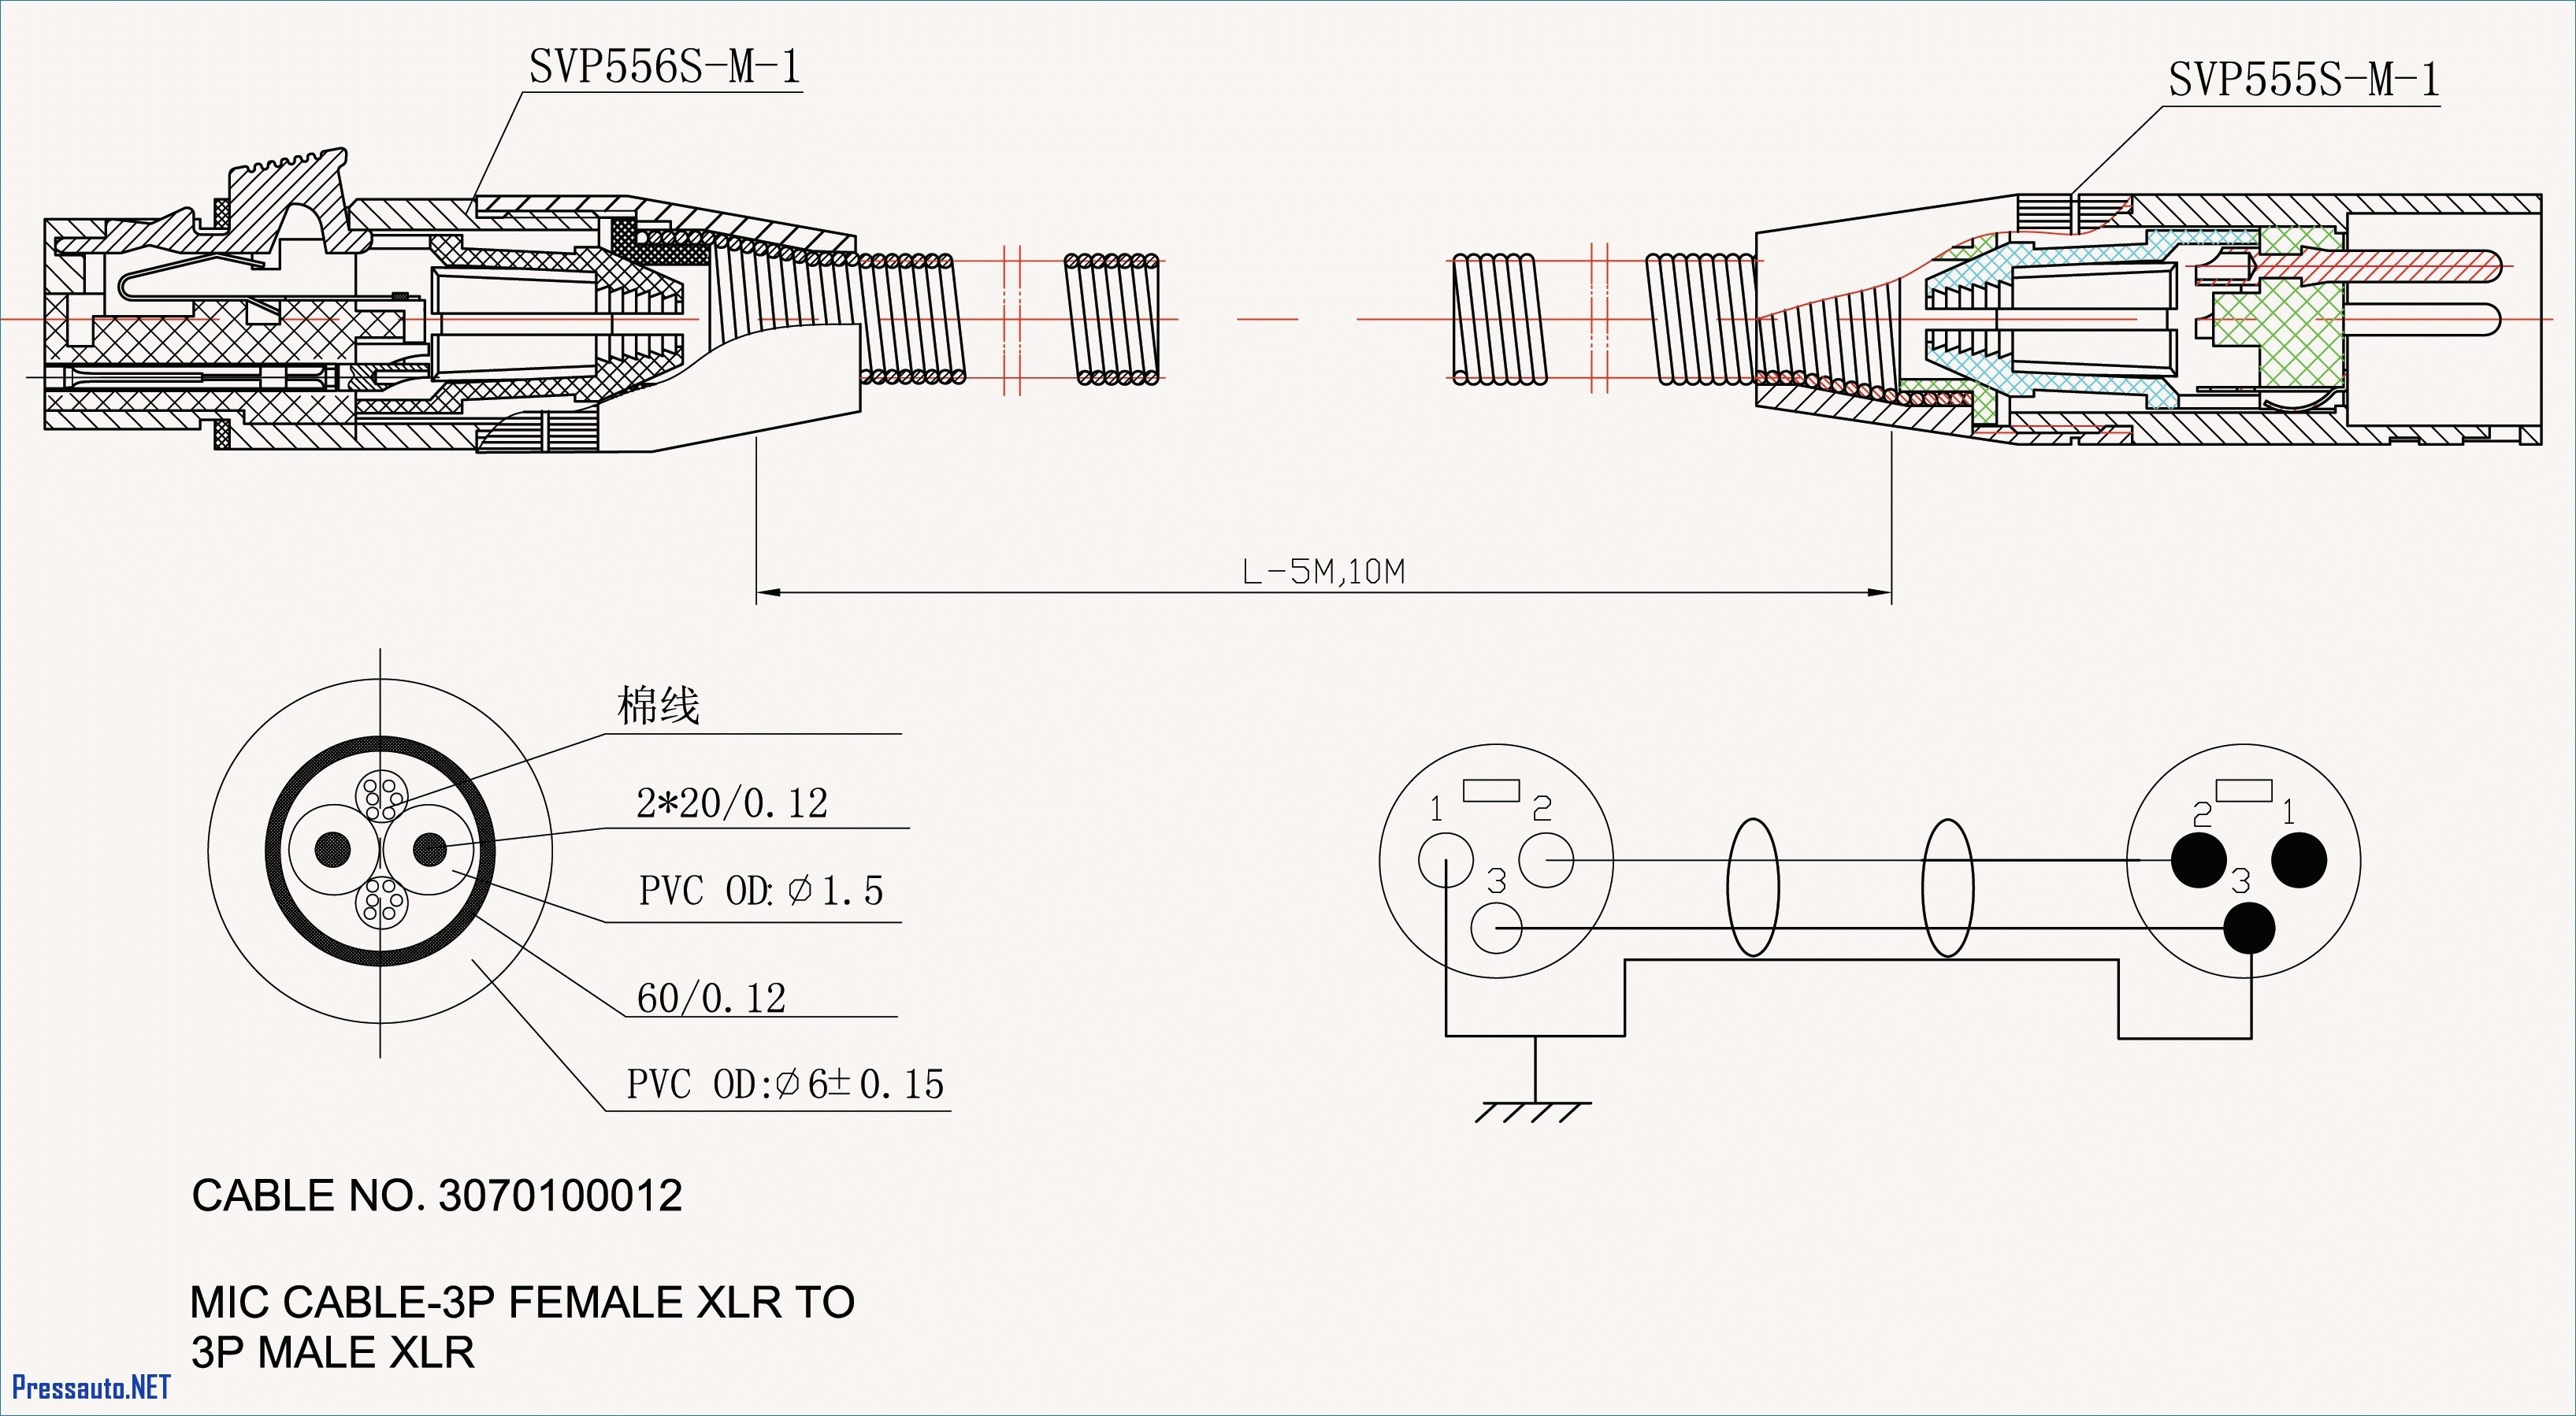 alternator wiring diagram chrysler valid wiring diagram for marine of chevy 4 wire alternator wiring diagram